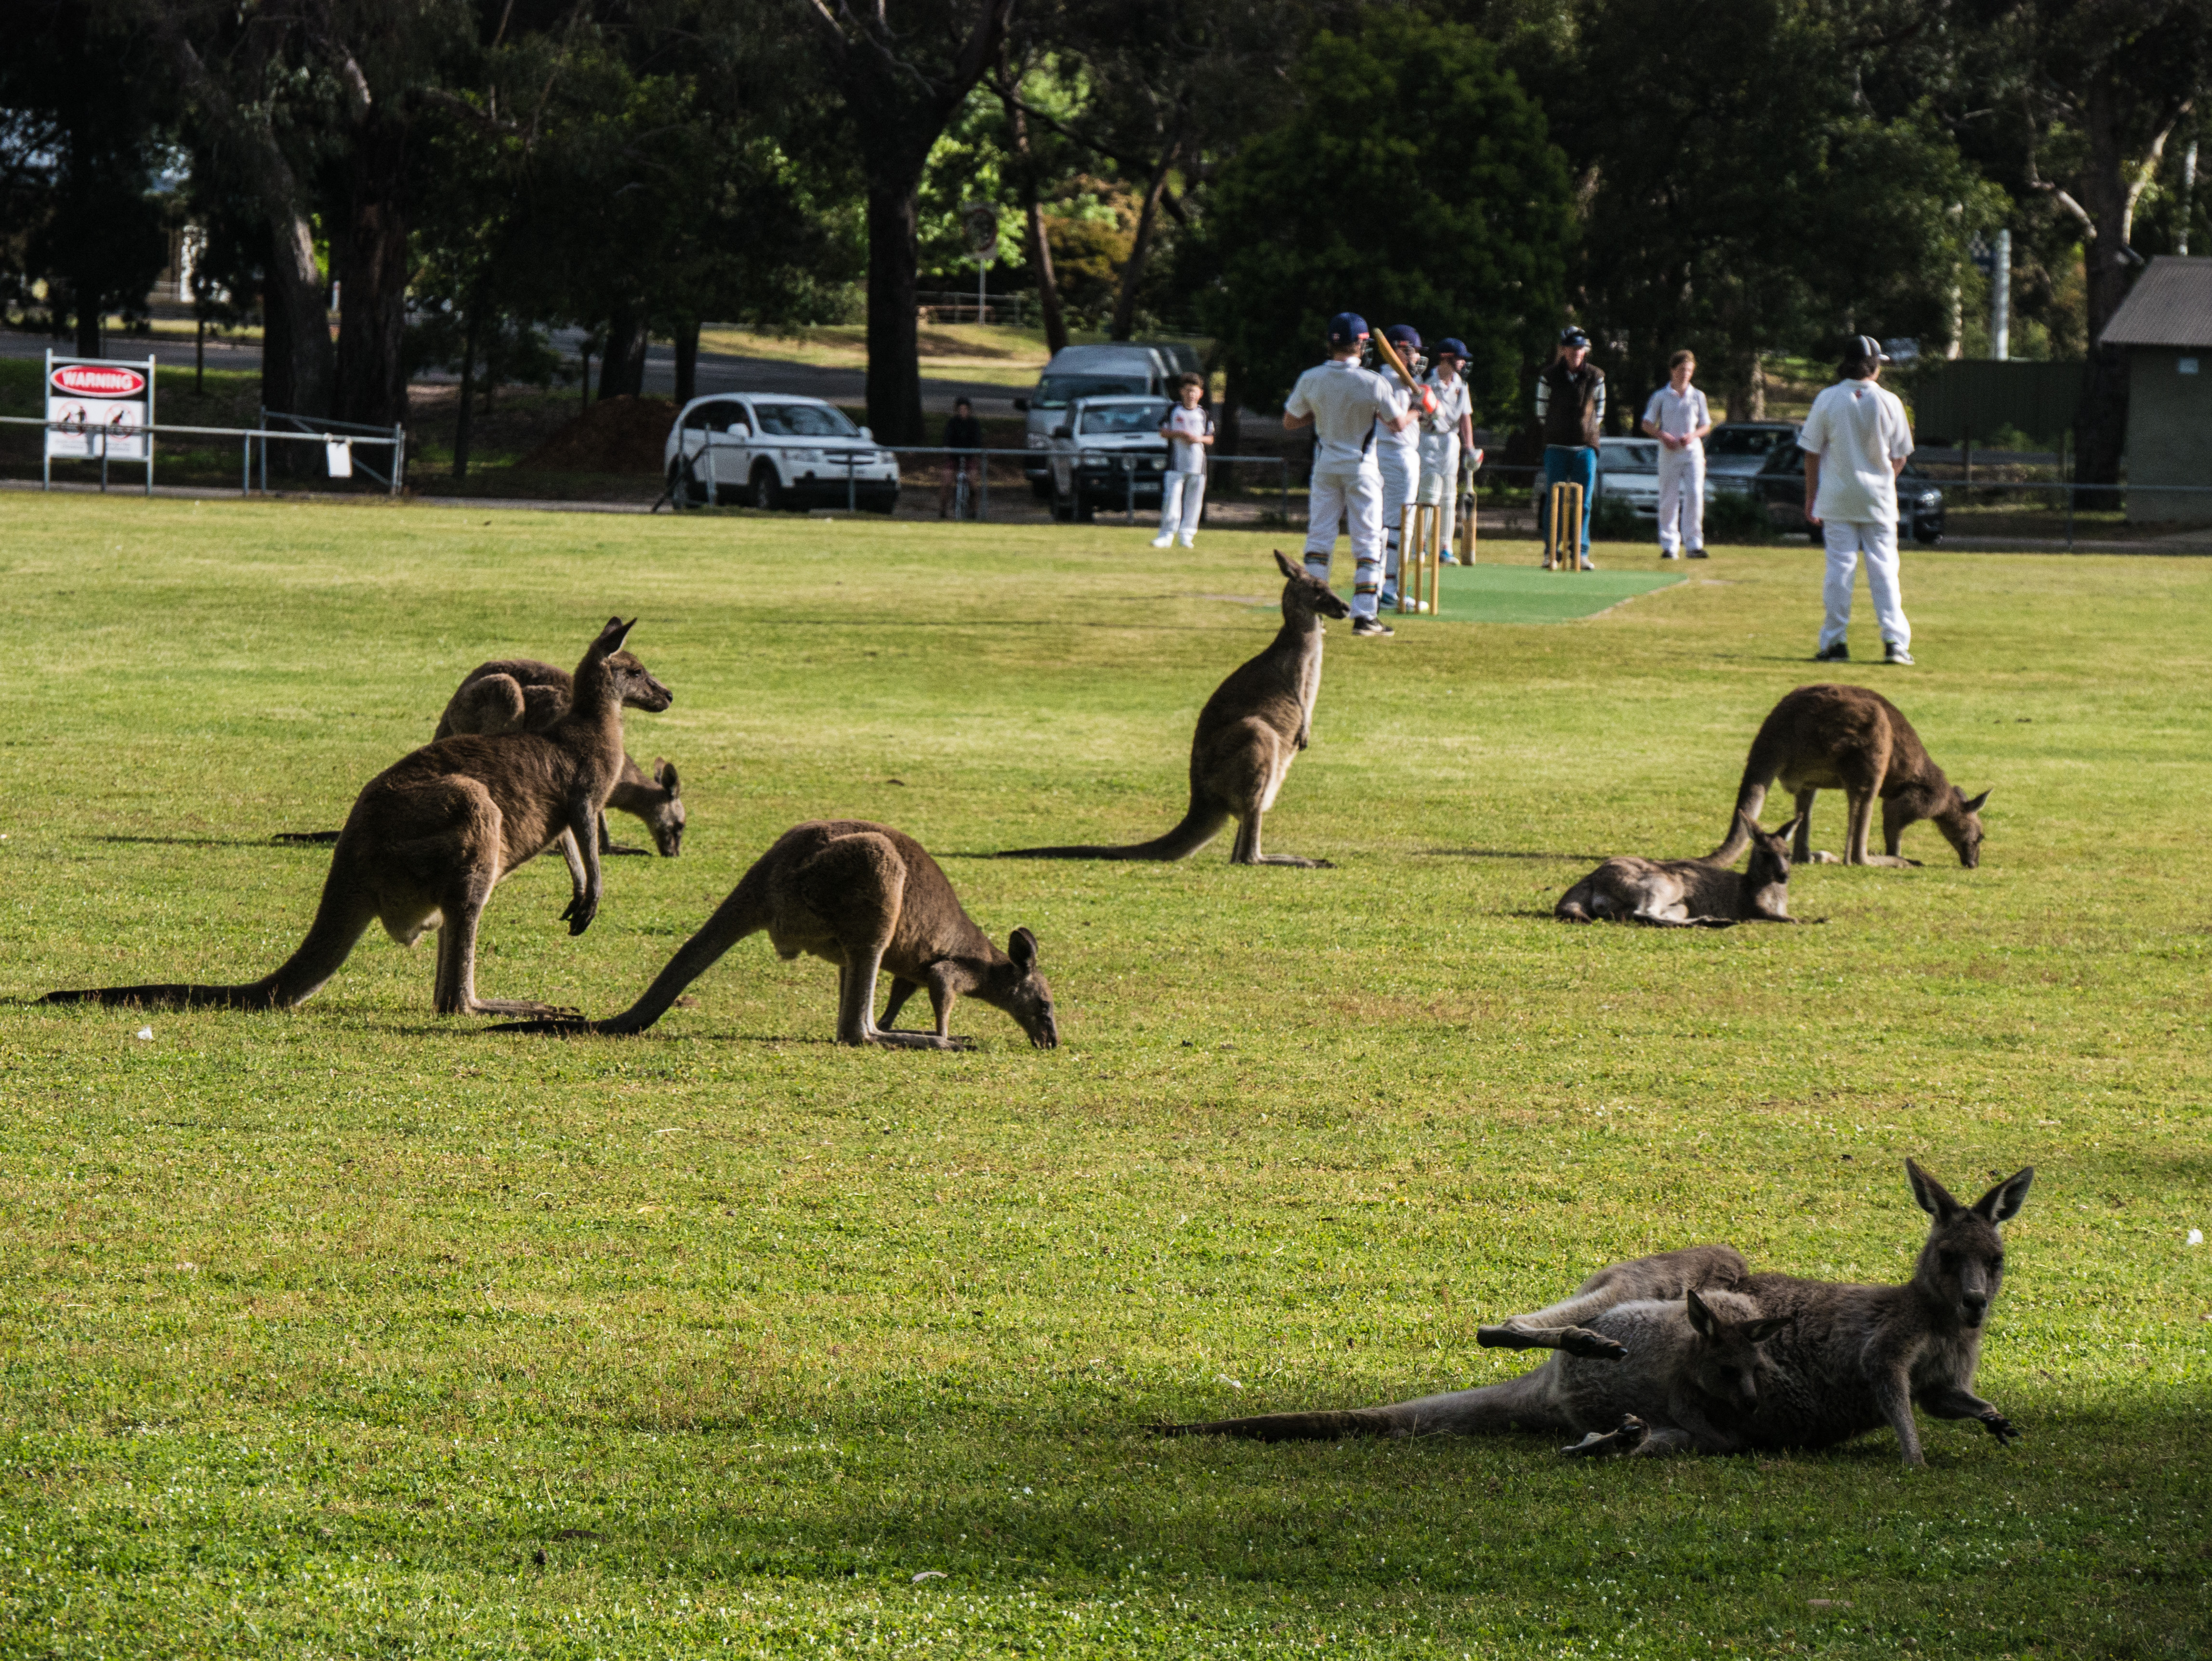 Kangaroos on a cricket pitch